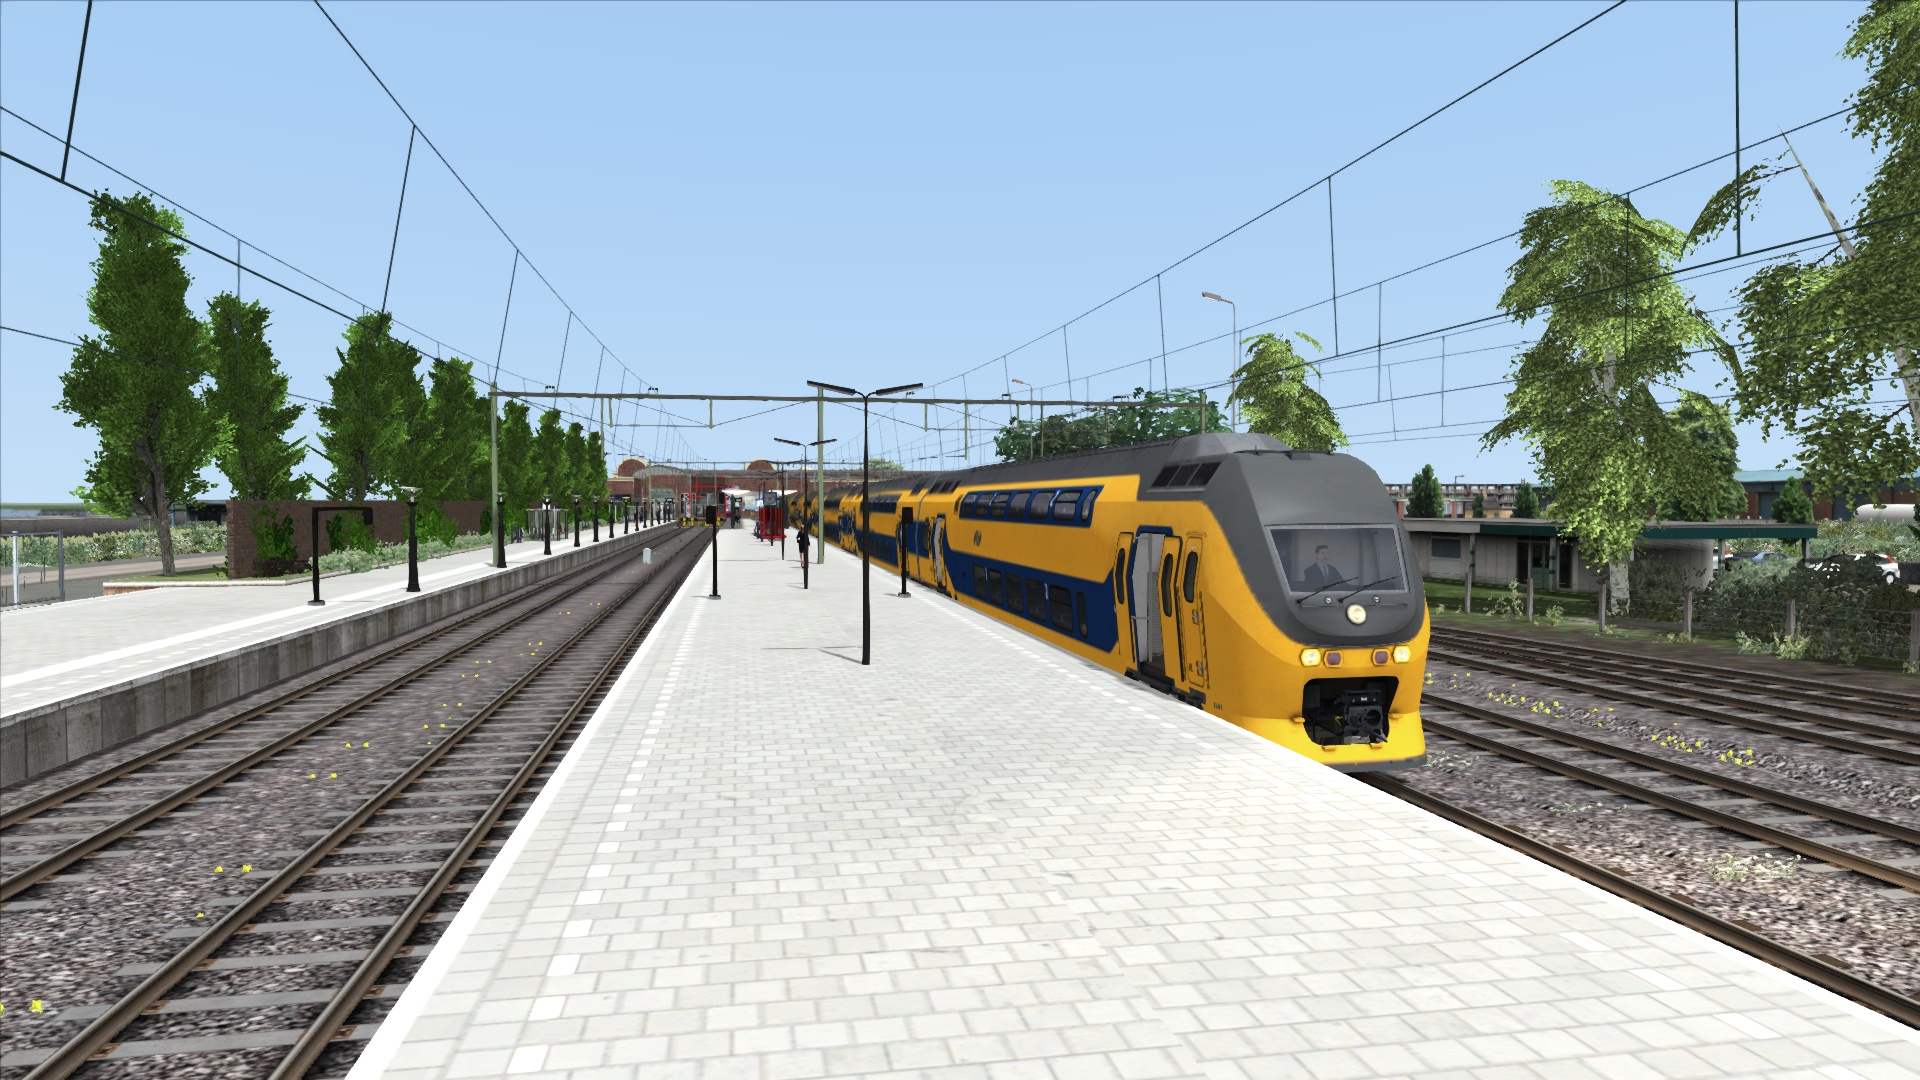 More information about "IC Vlissingen - Rotterdam volgens dienstregeling dec 2020"